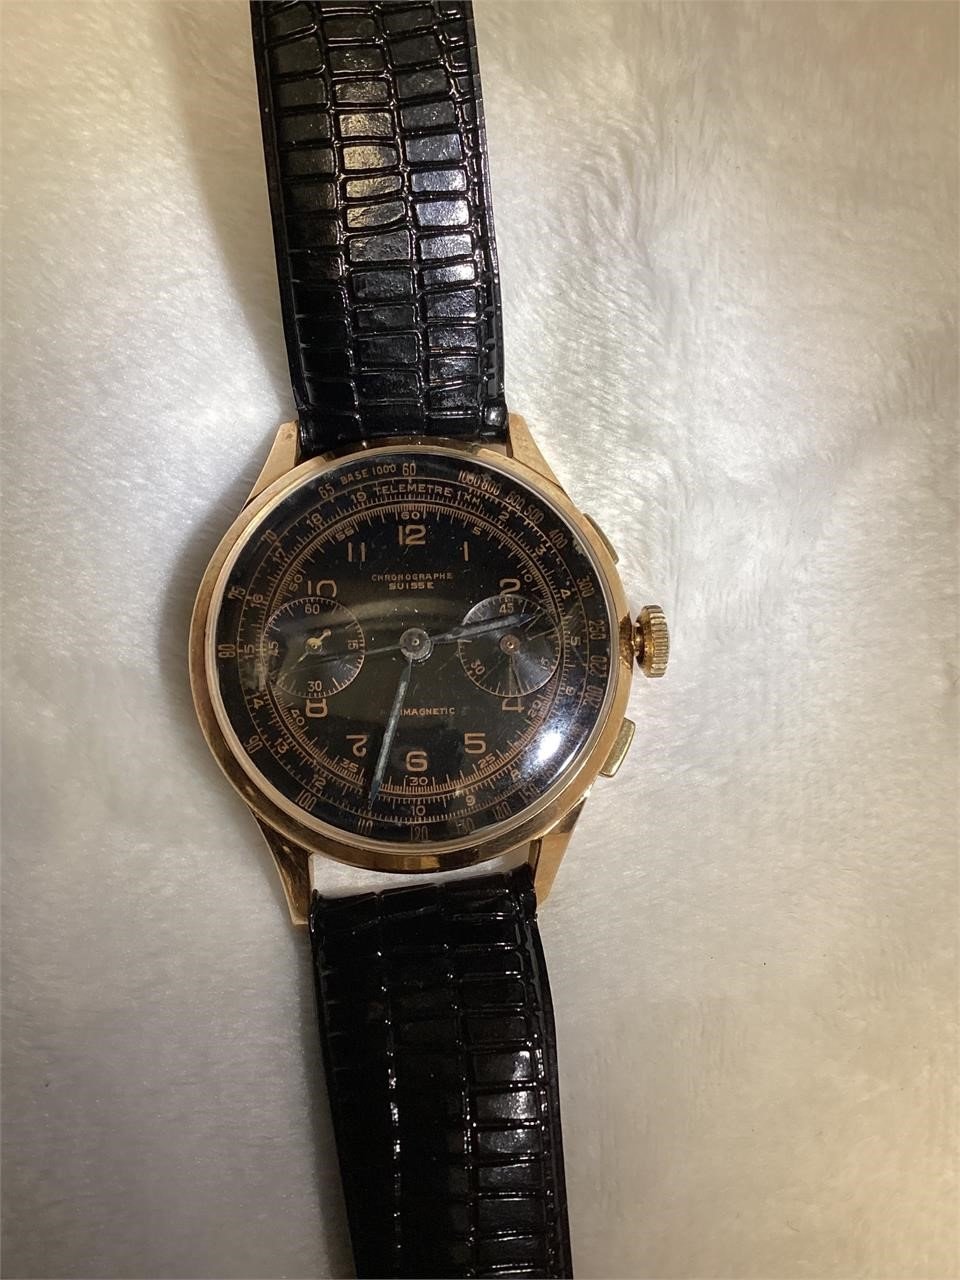 Chronographe Suisse 18k wristwatch